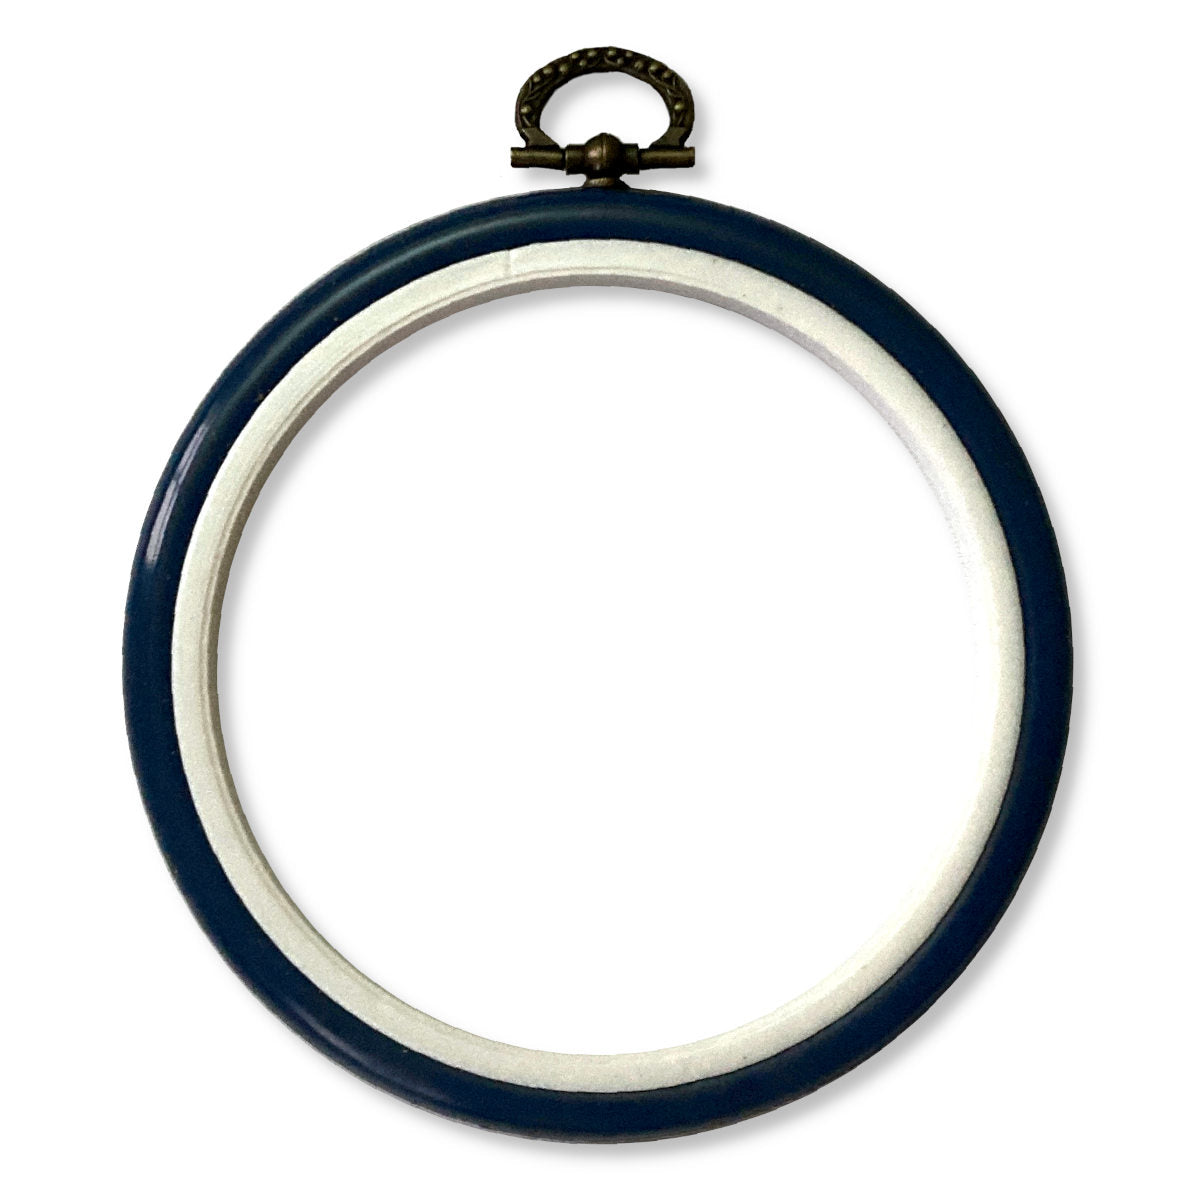 4 inch dark blue flexi grip embroidery hoop